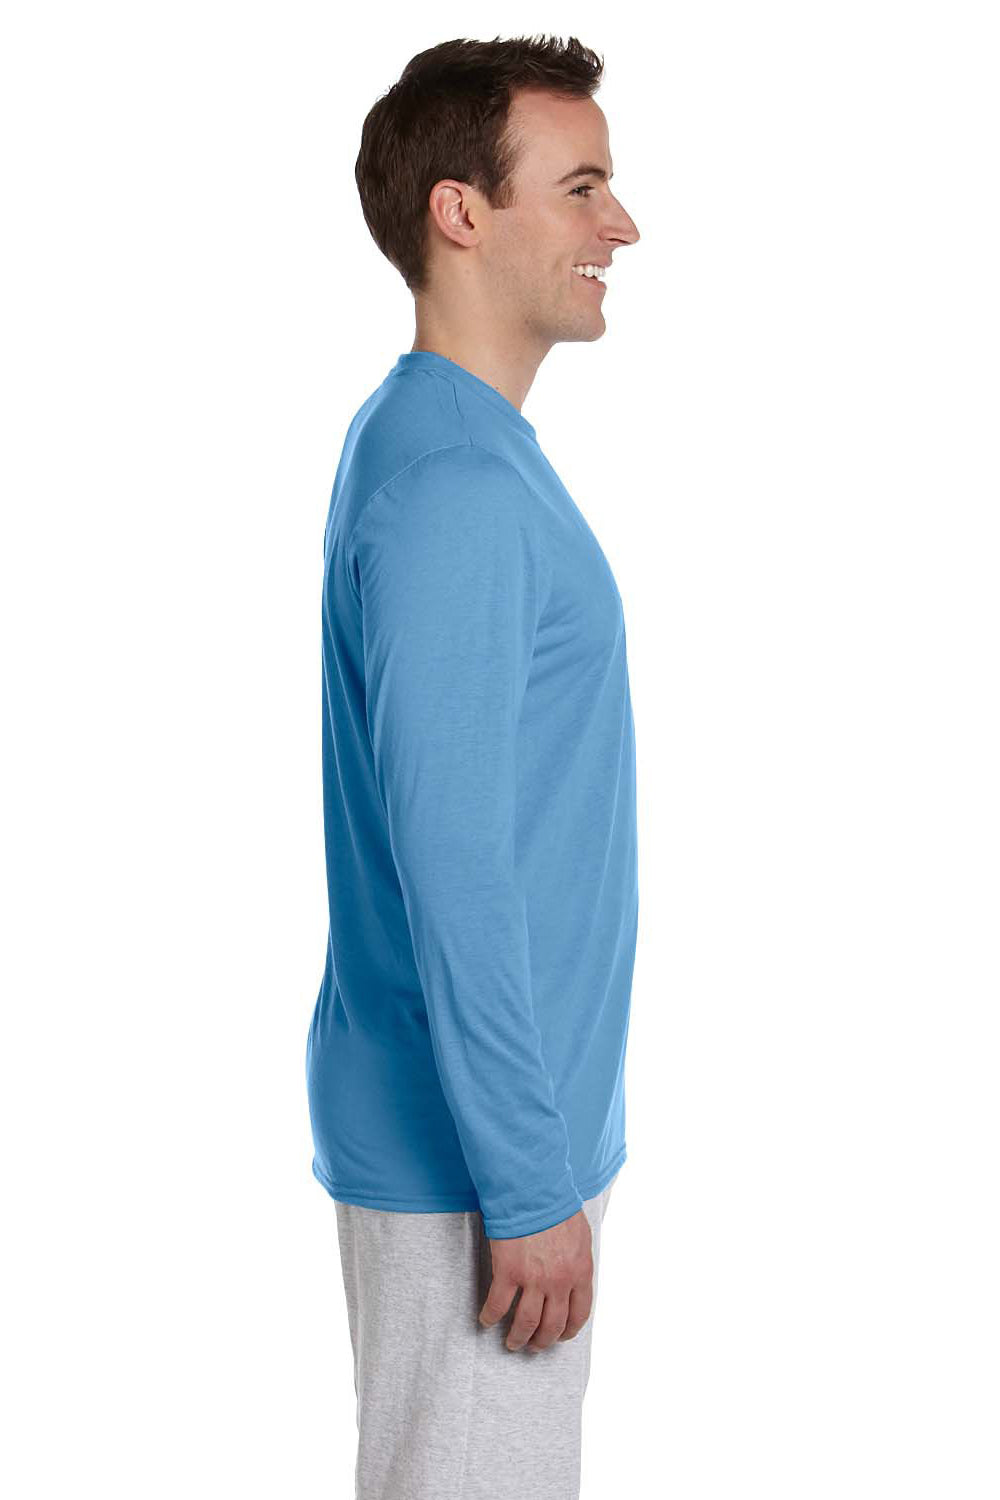 Gildan G424 Mens Performance Jersey Moisture Wicking Long Sleeve Crewneck T-Shirt Carolina Blue Side